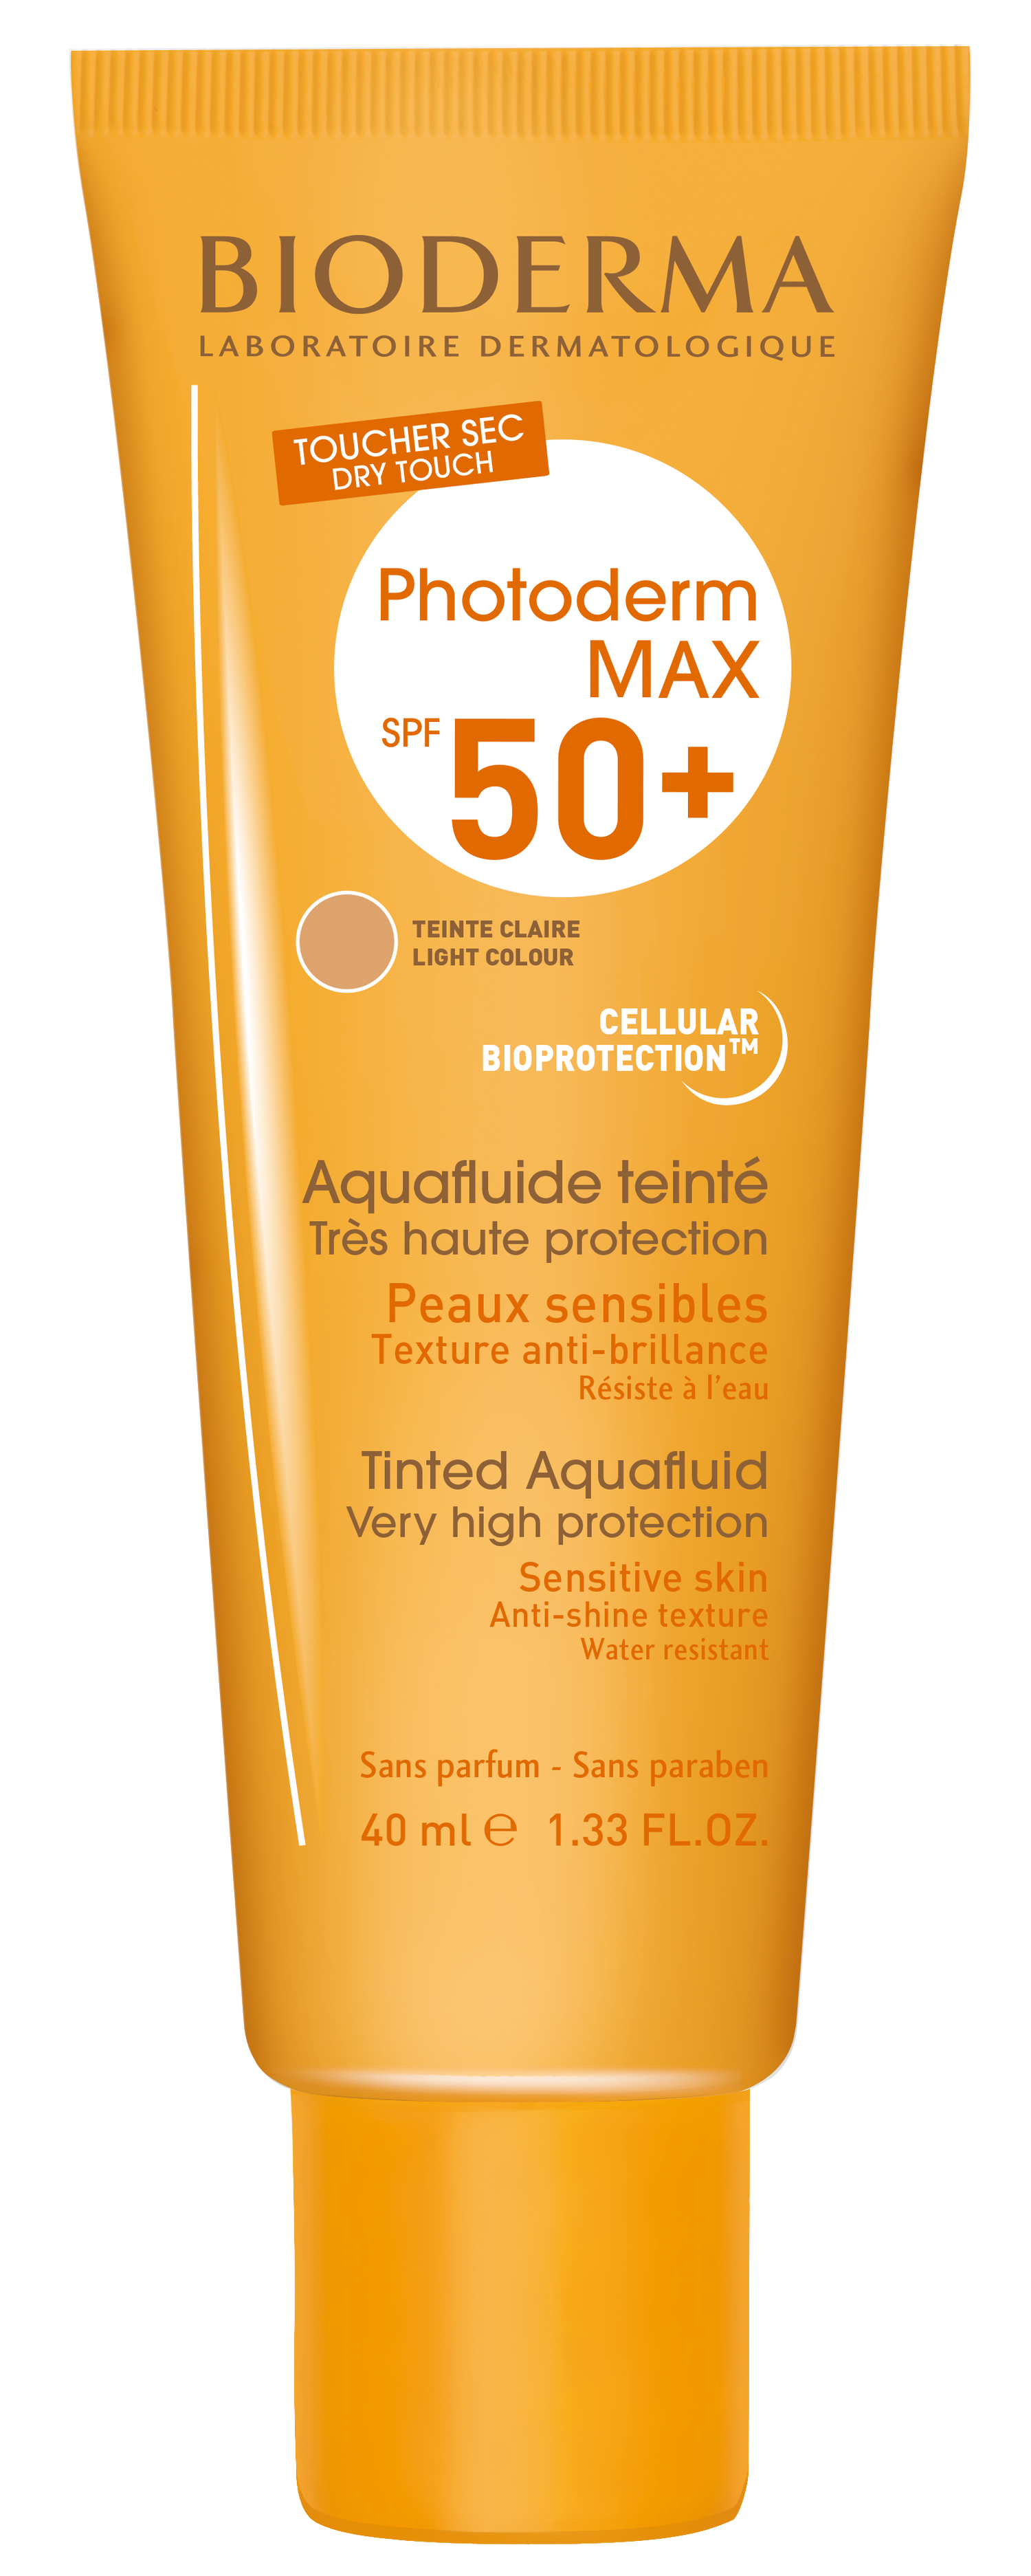 Bioderma Photoderm MAX Aquafluide Light SPF50+ for All Skin Types 40ml